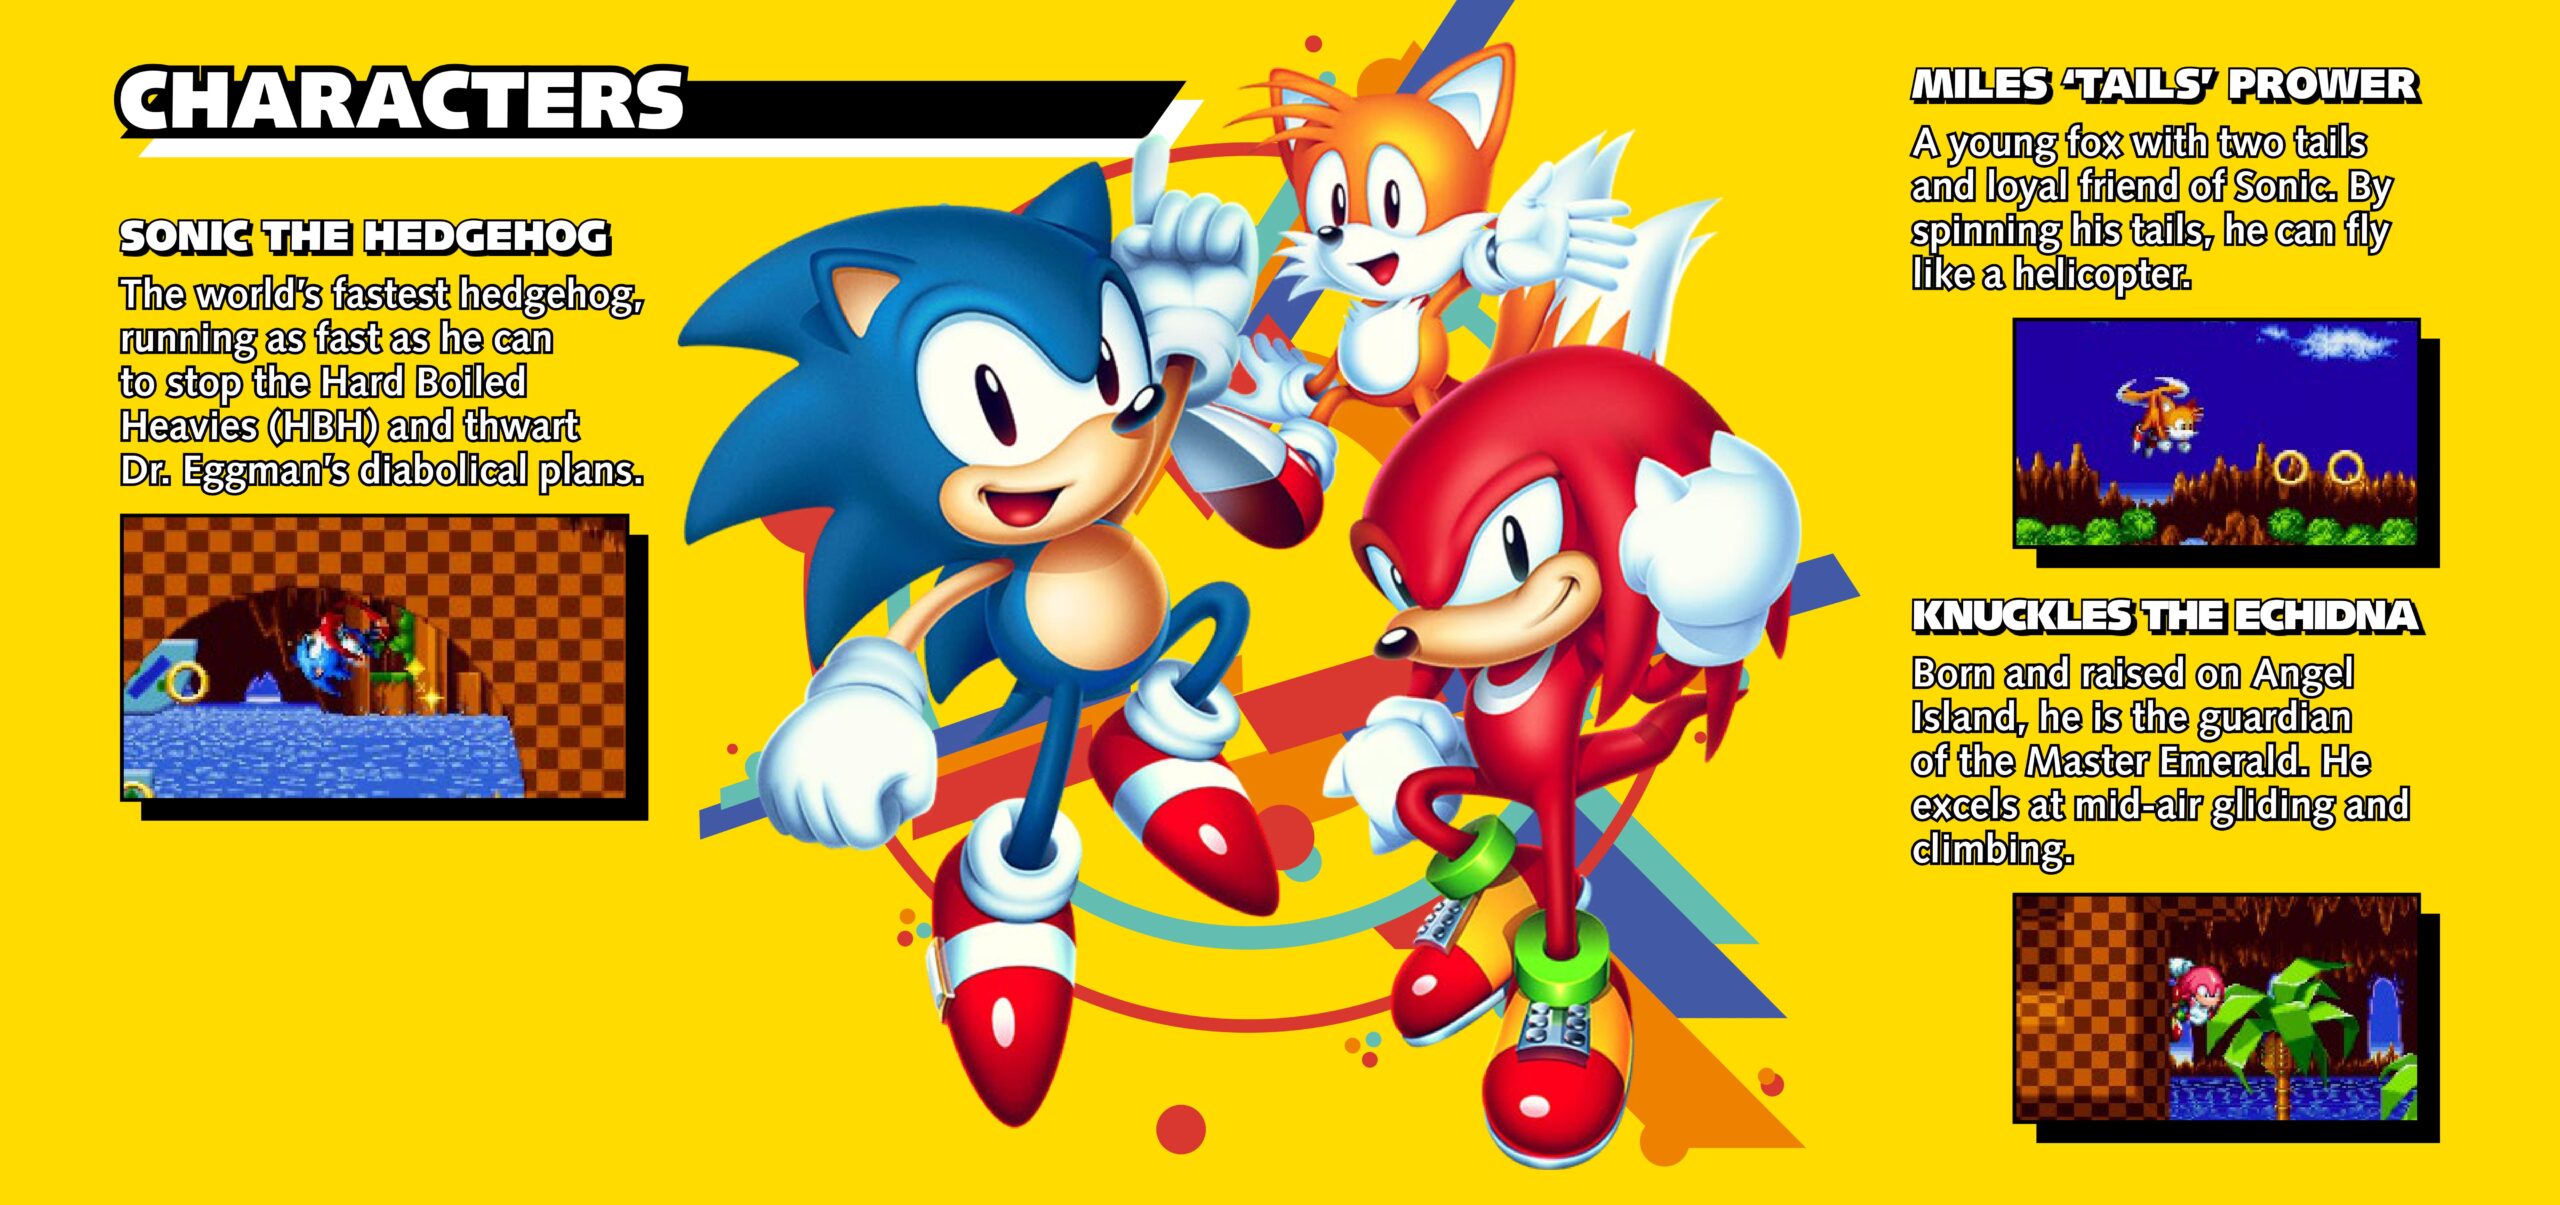 Stream Sonic Mania Plus - Time Trials Plus (feat. Jun Senoue) by Sonic Mania